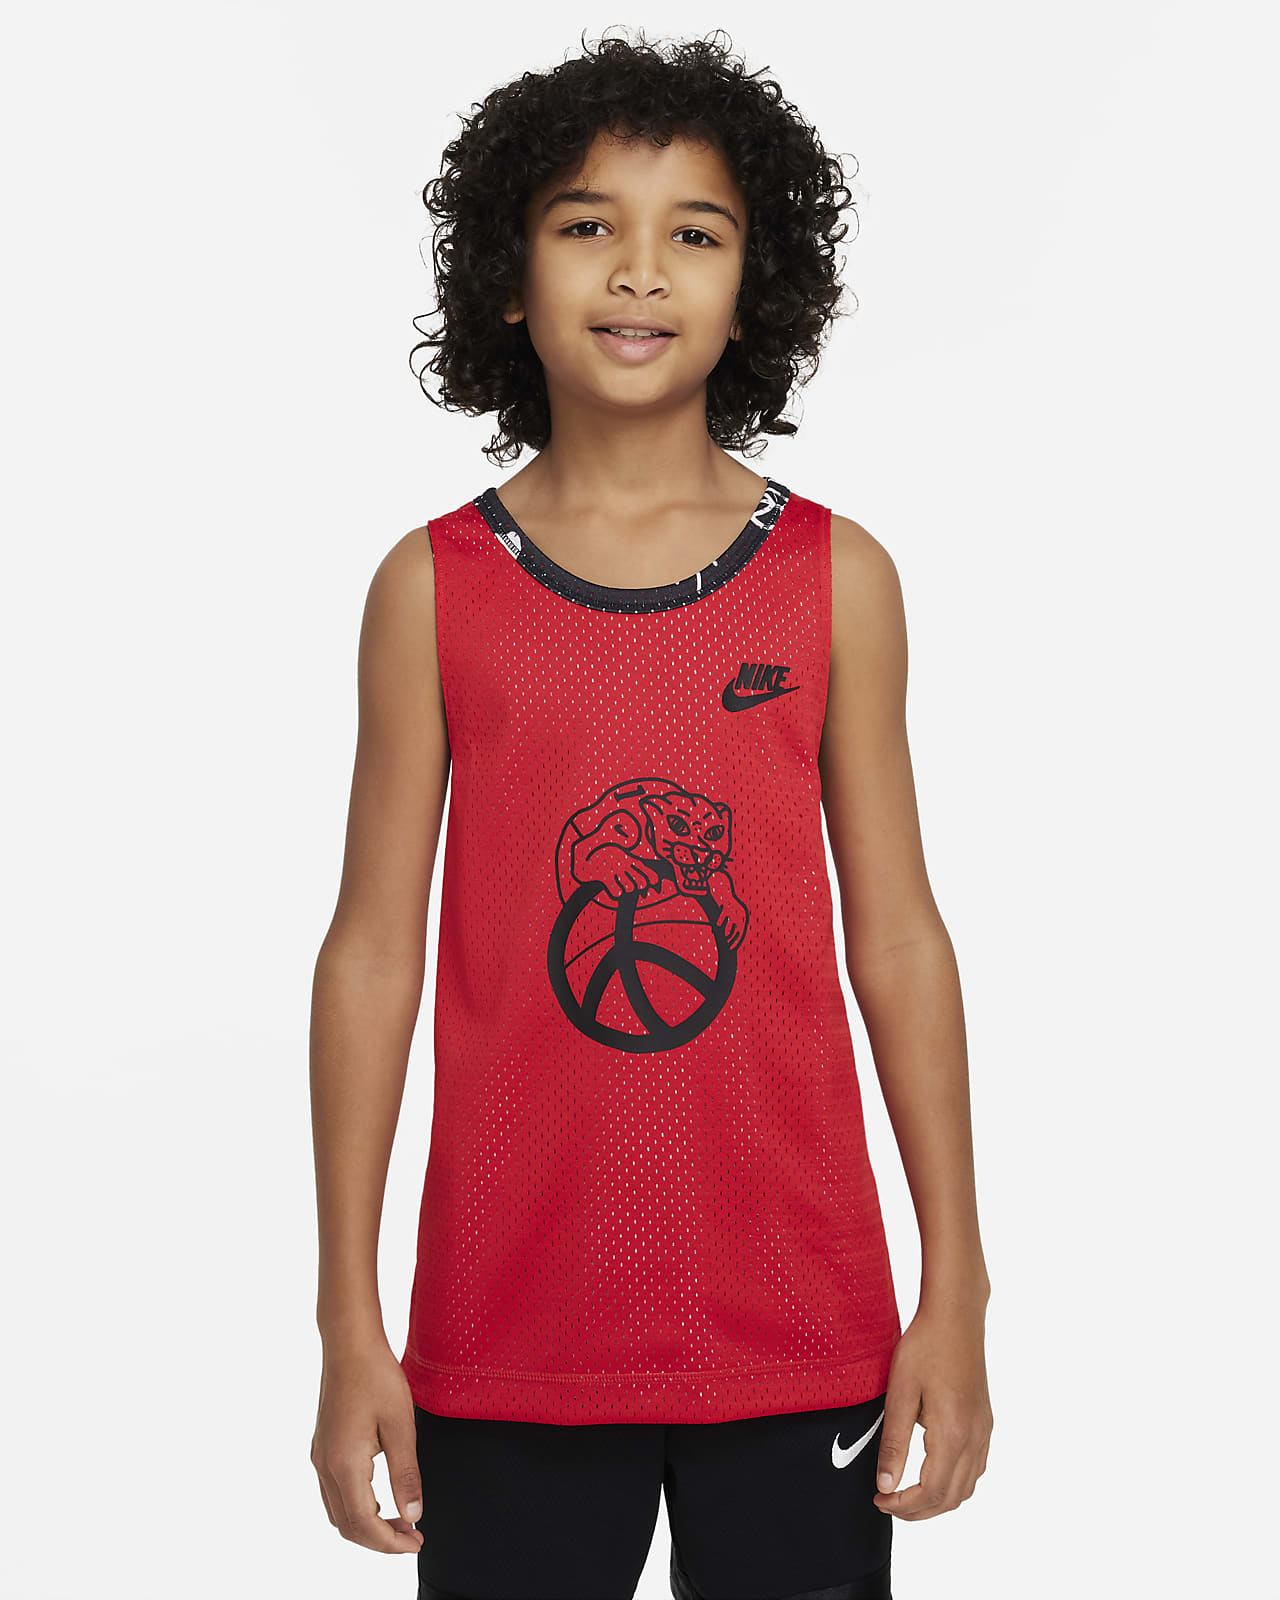 Nike Culture of Basketball wendbares Basketballtrikot für ältere Kinder (Jungen)